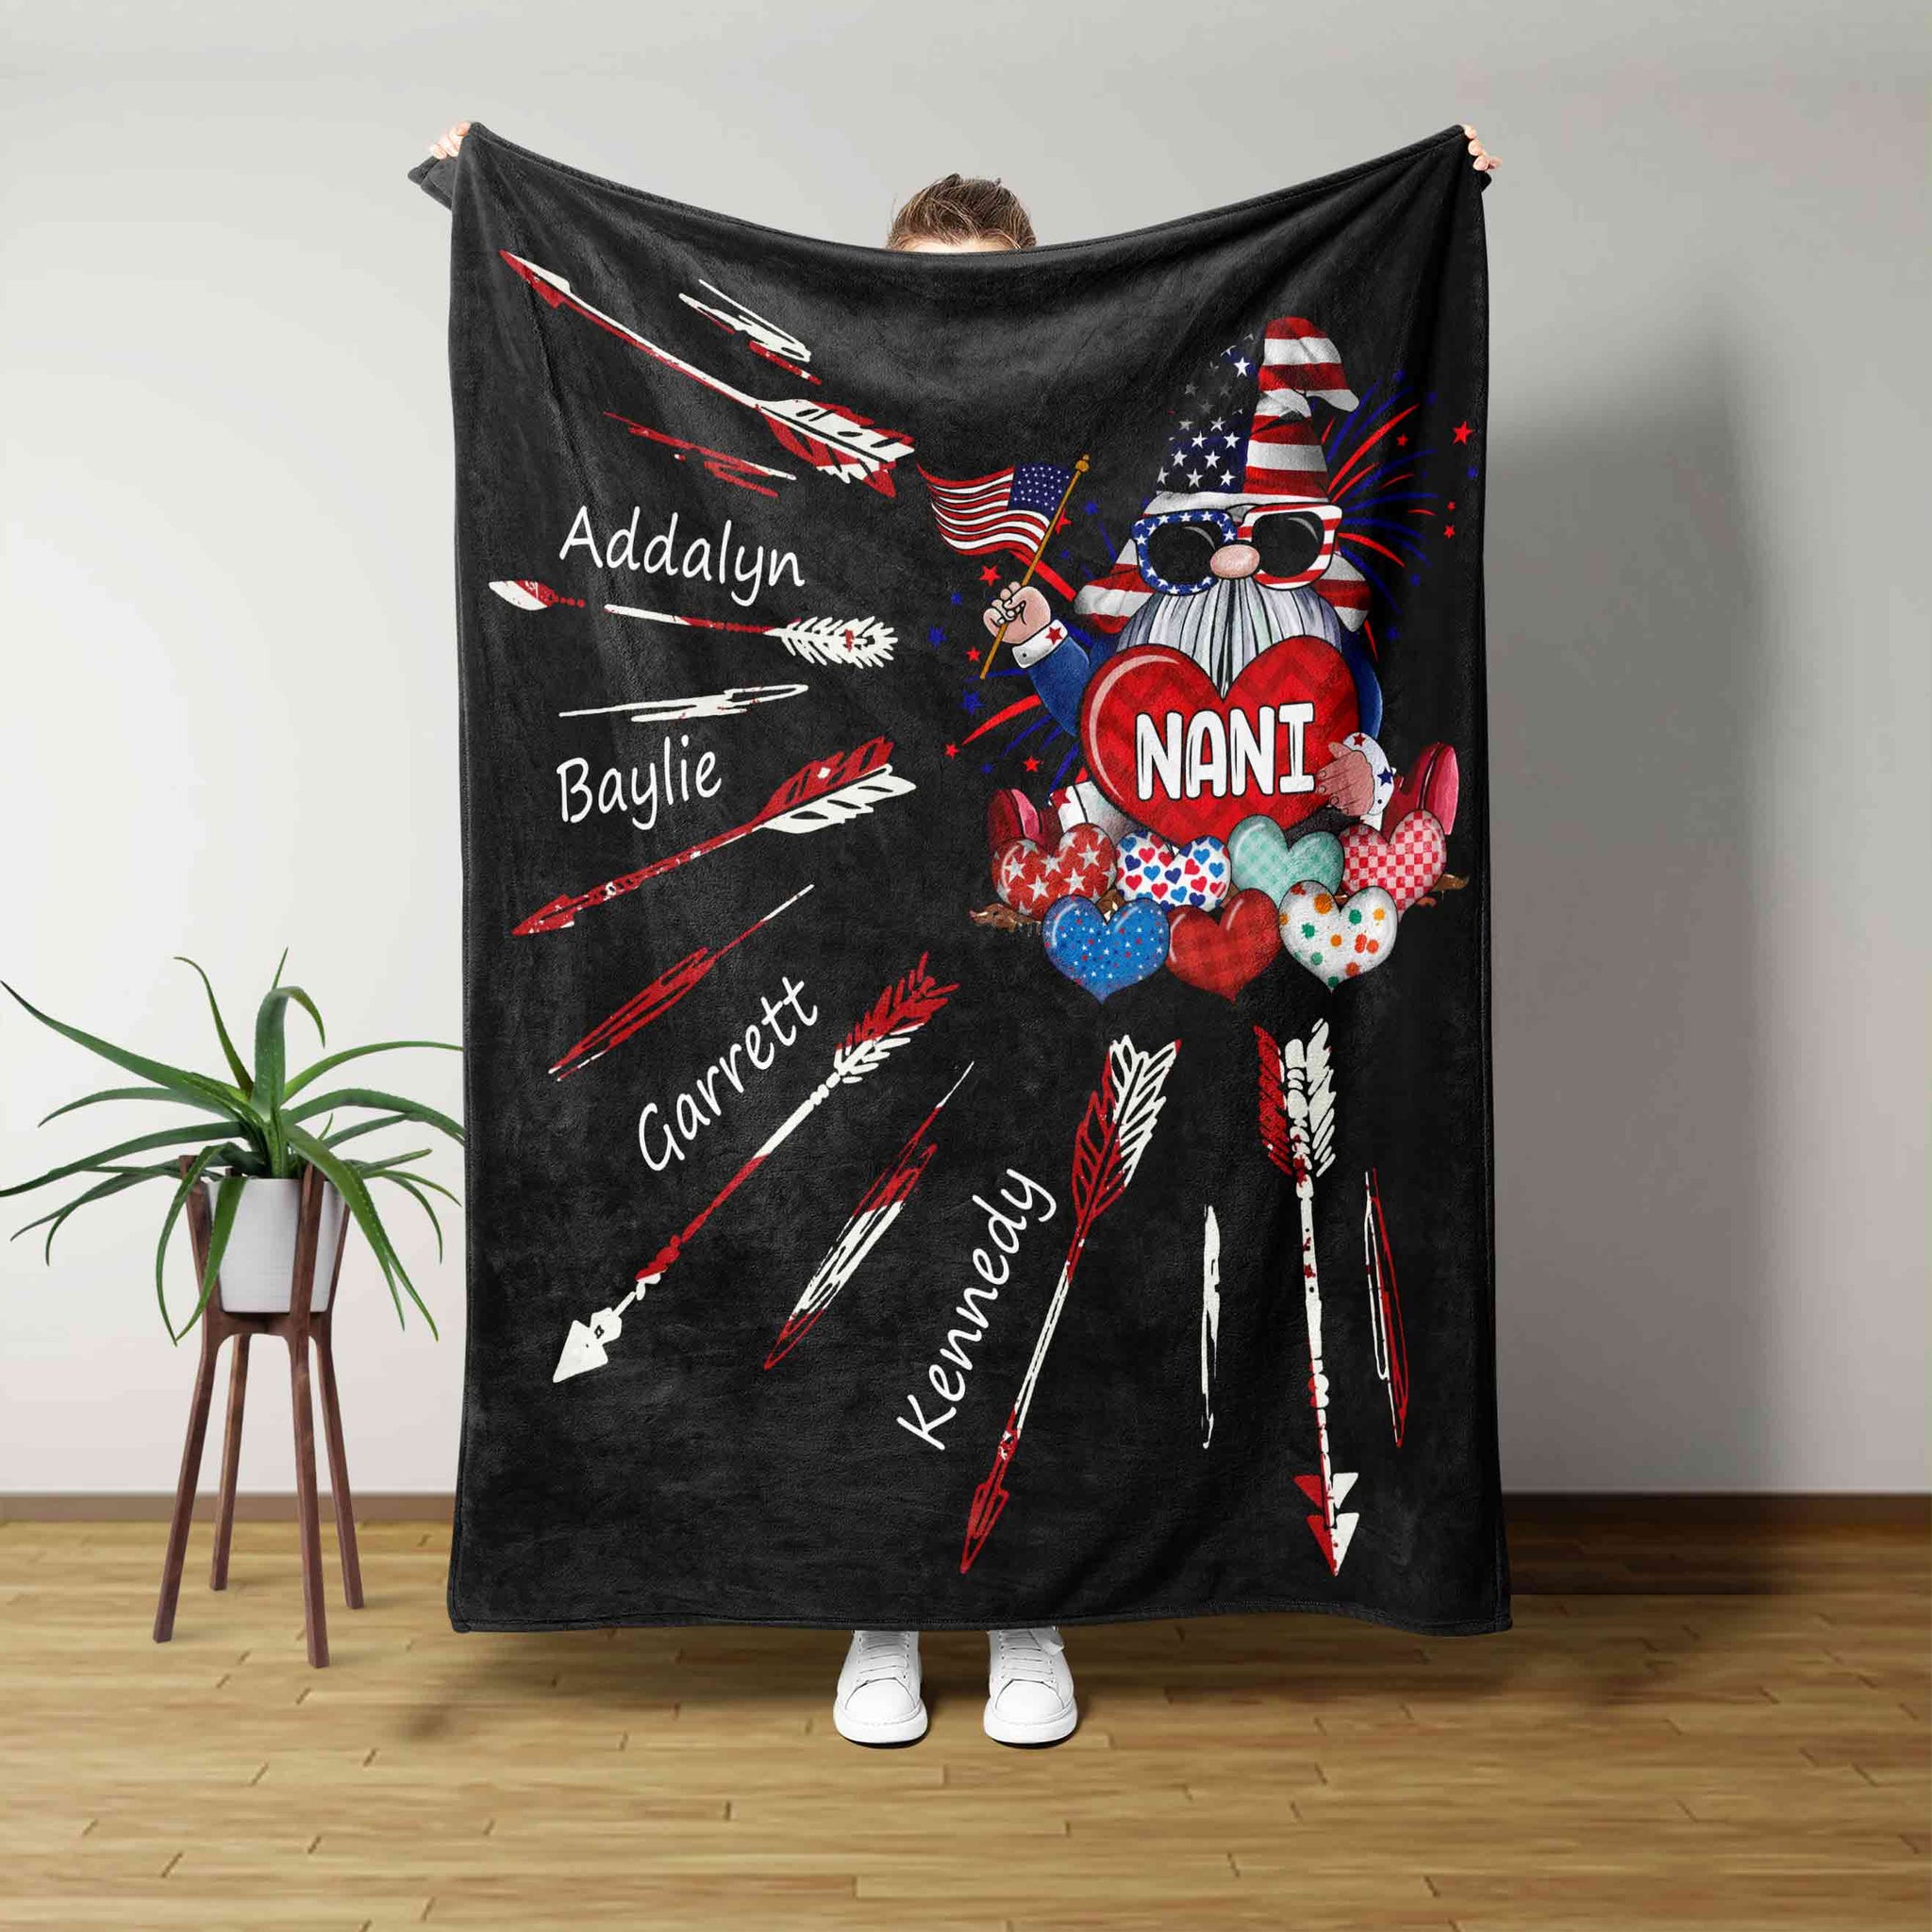 Nani Blanket, Gnome Blanket, Arrow Blanket, American Flag Blanket, Heart Blanket, Custom Name Blanket, Gift Blanket